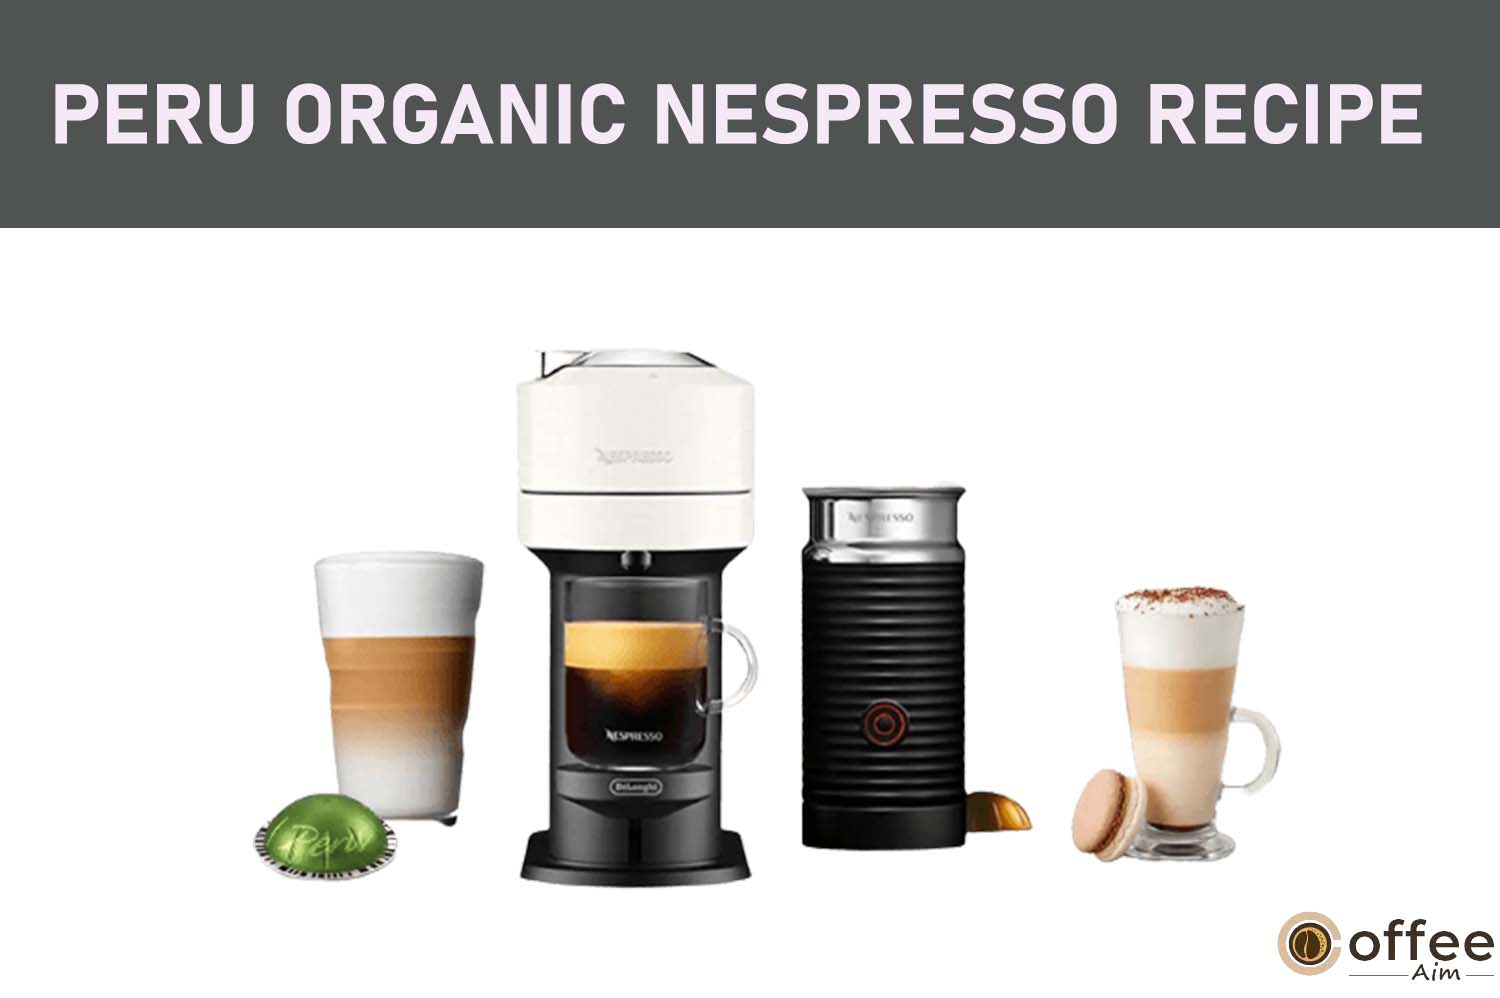 Featured image for the article "Peru Organic Nespresso Recipe"